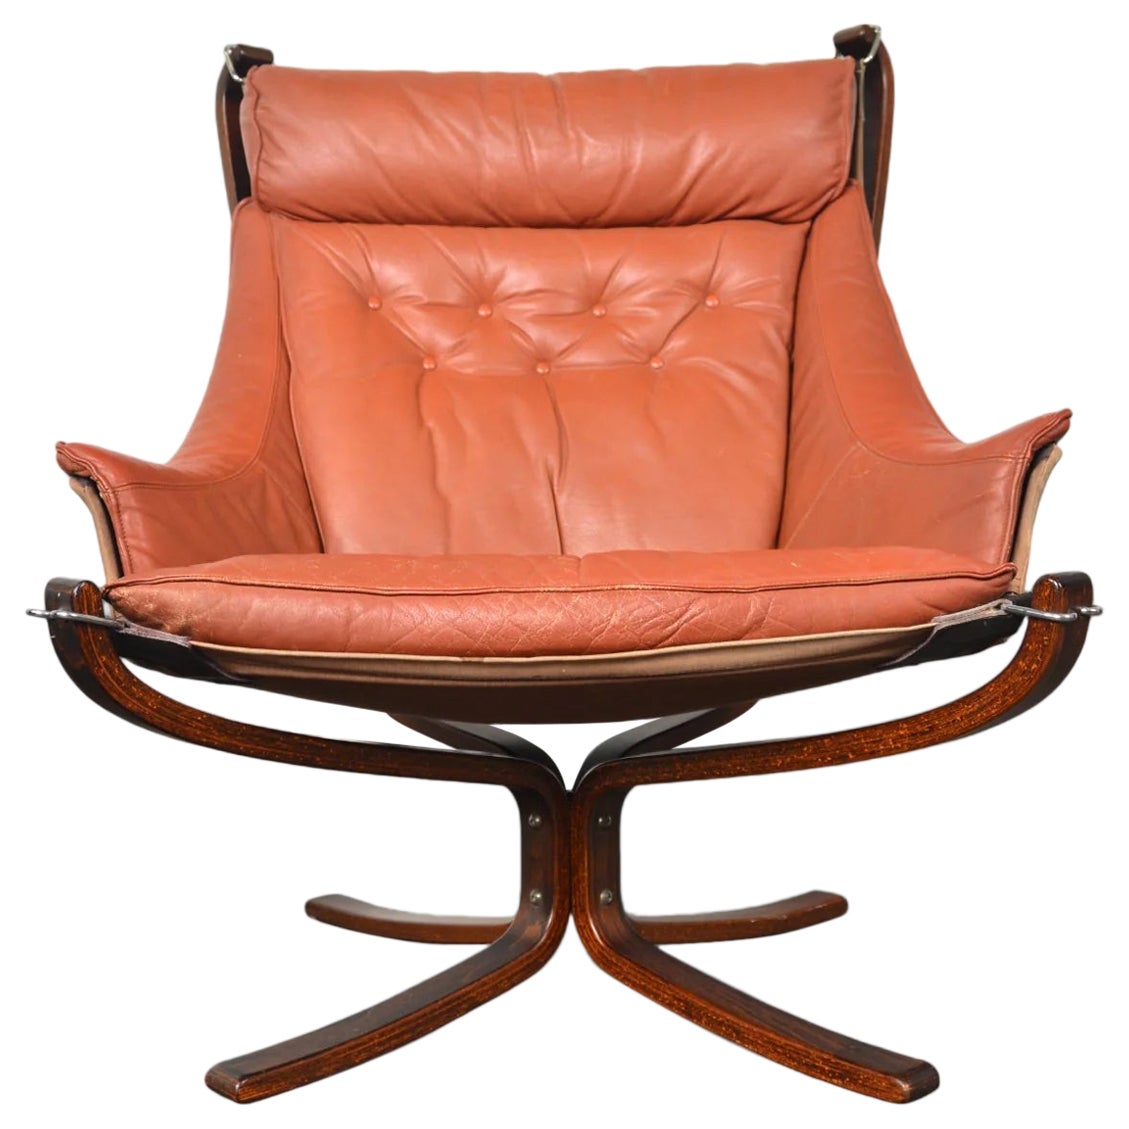 Hochlehniger geflügelter Falcon-Stuhl aus rostfarbenem Leder